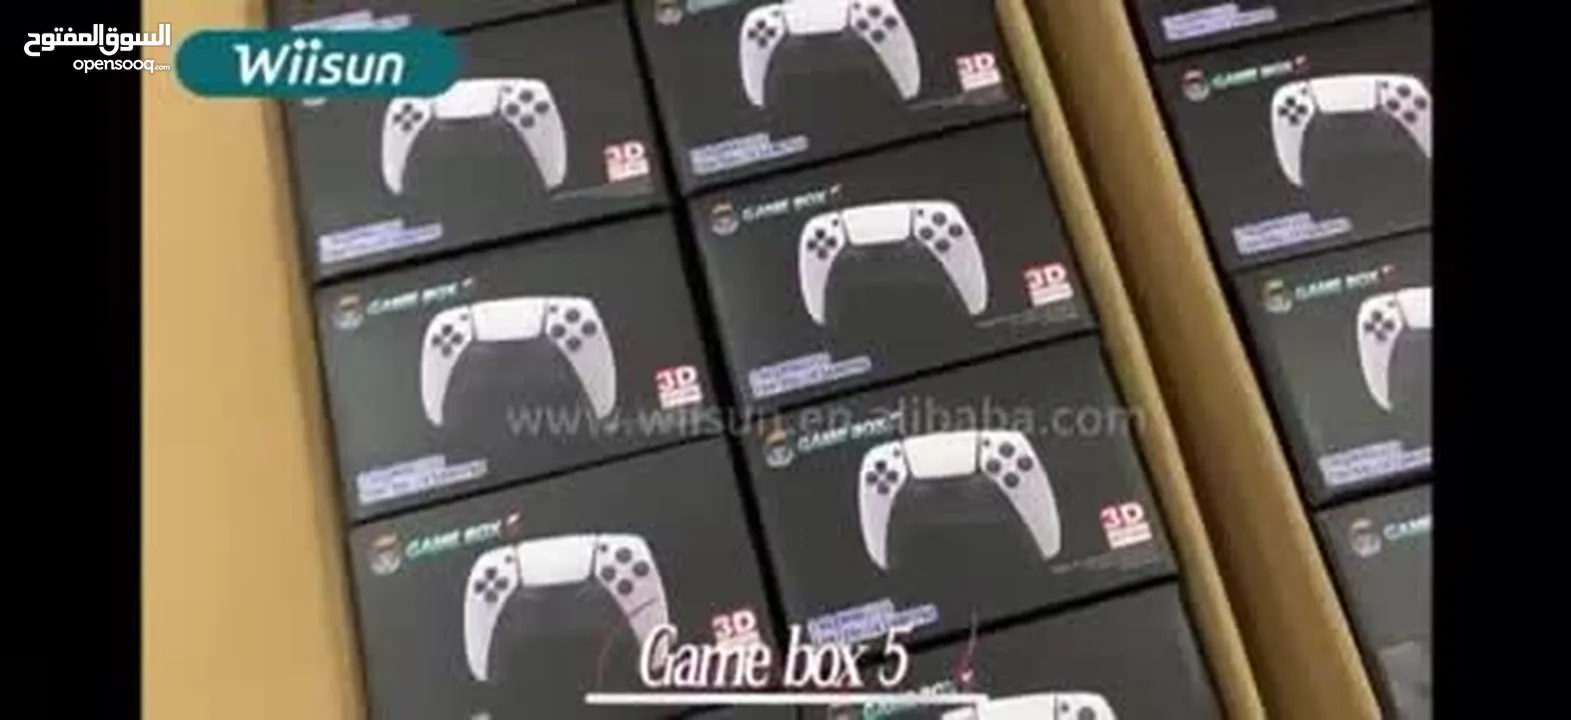 Gaming console box, شوف الوصف